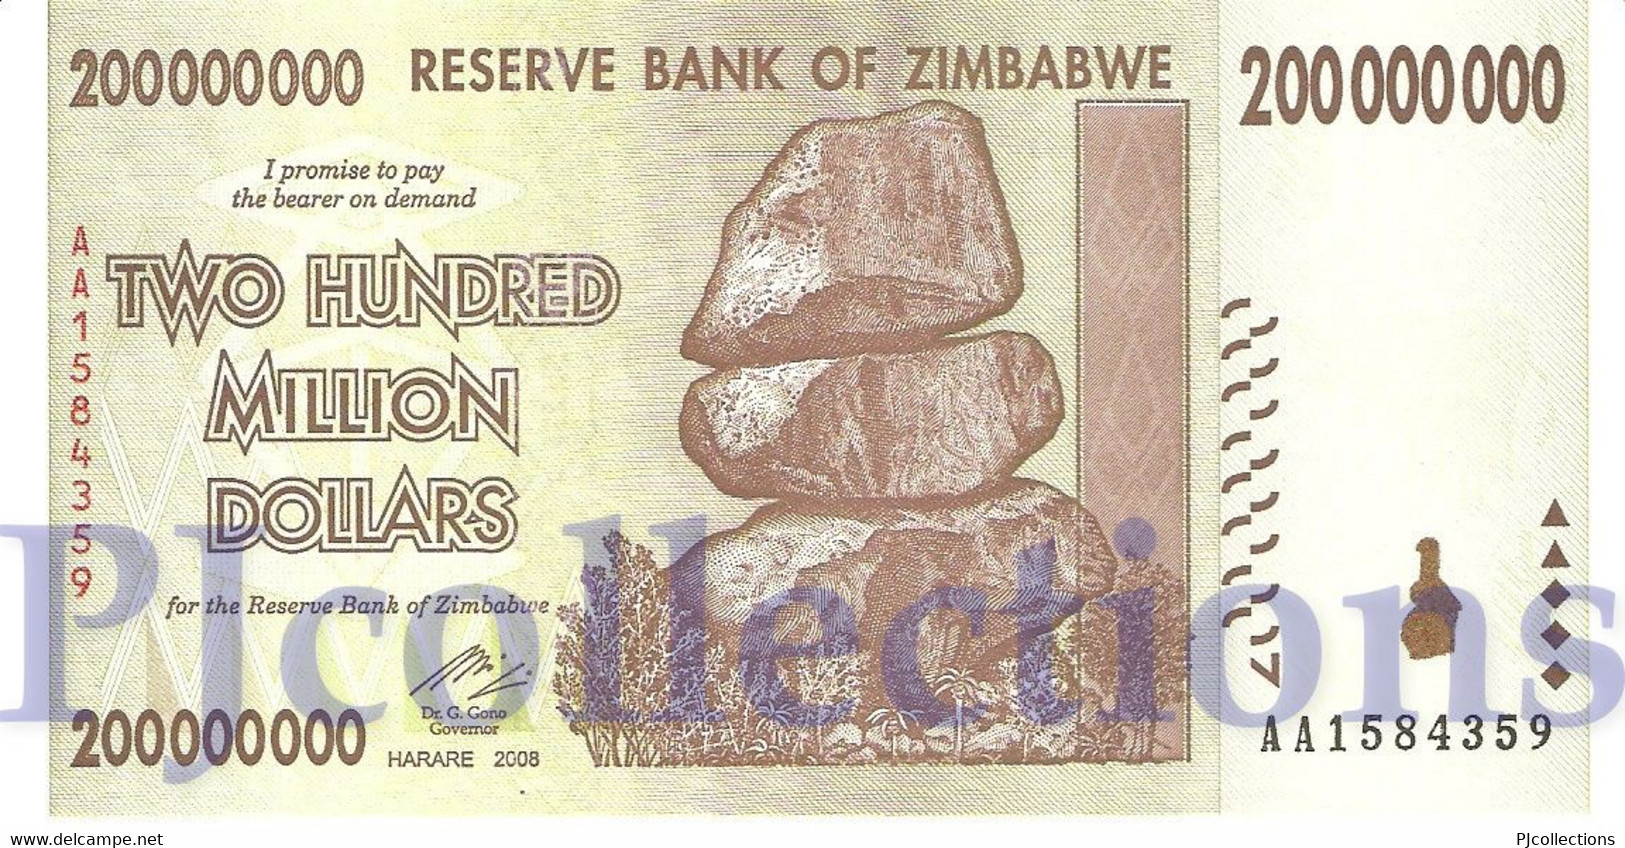 ZIMBABWE 200 MILLION DOLLARS 2008 PICK 81 UNC PREFIX "AA" - Zimbabwe